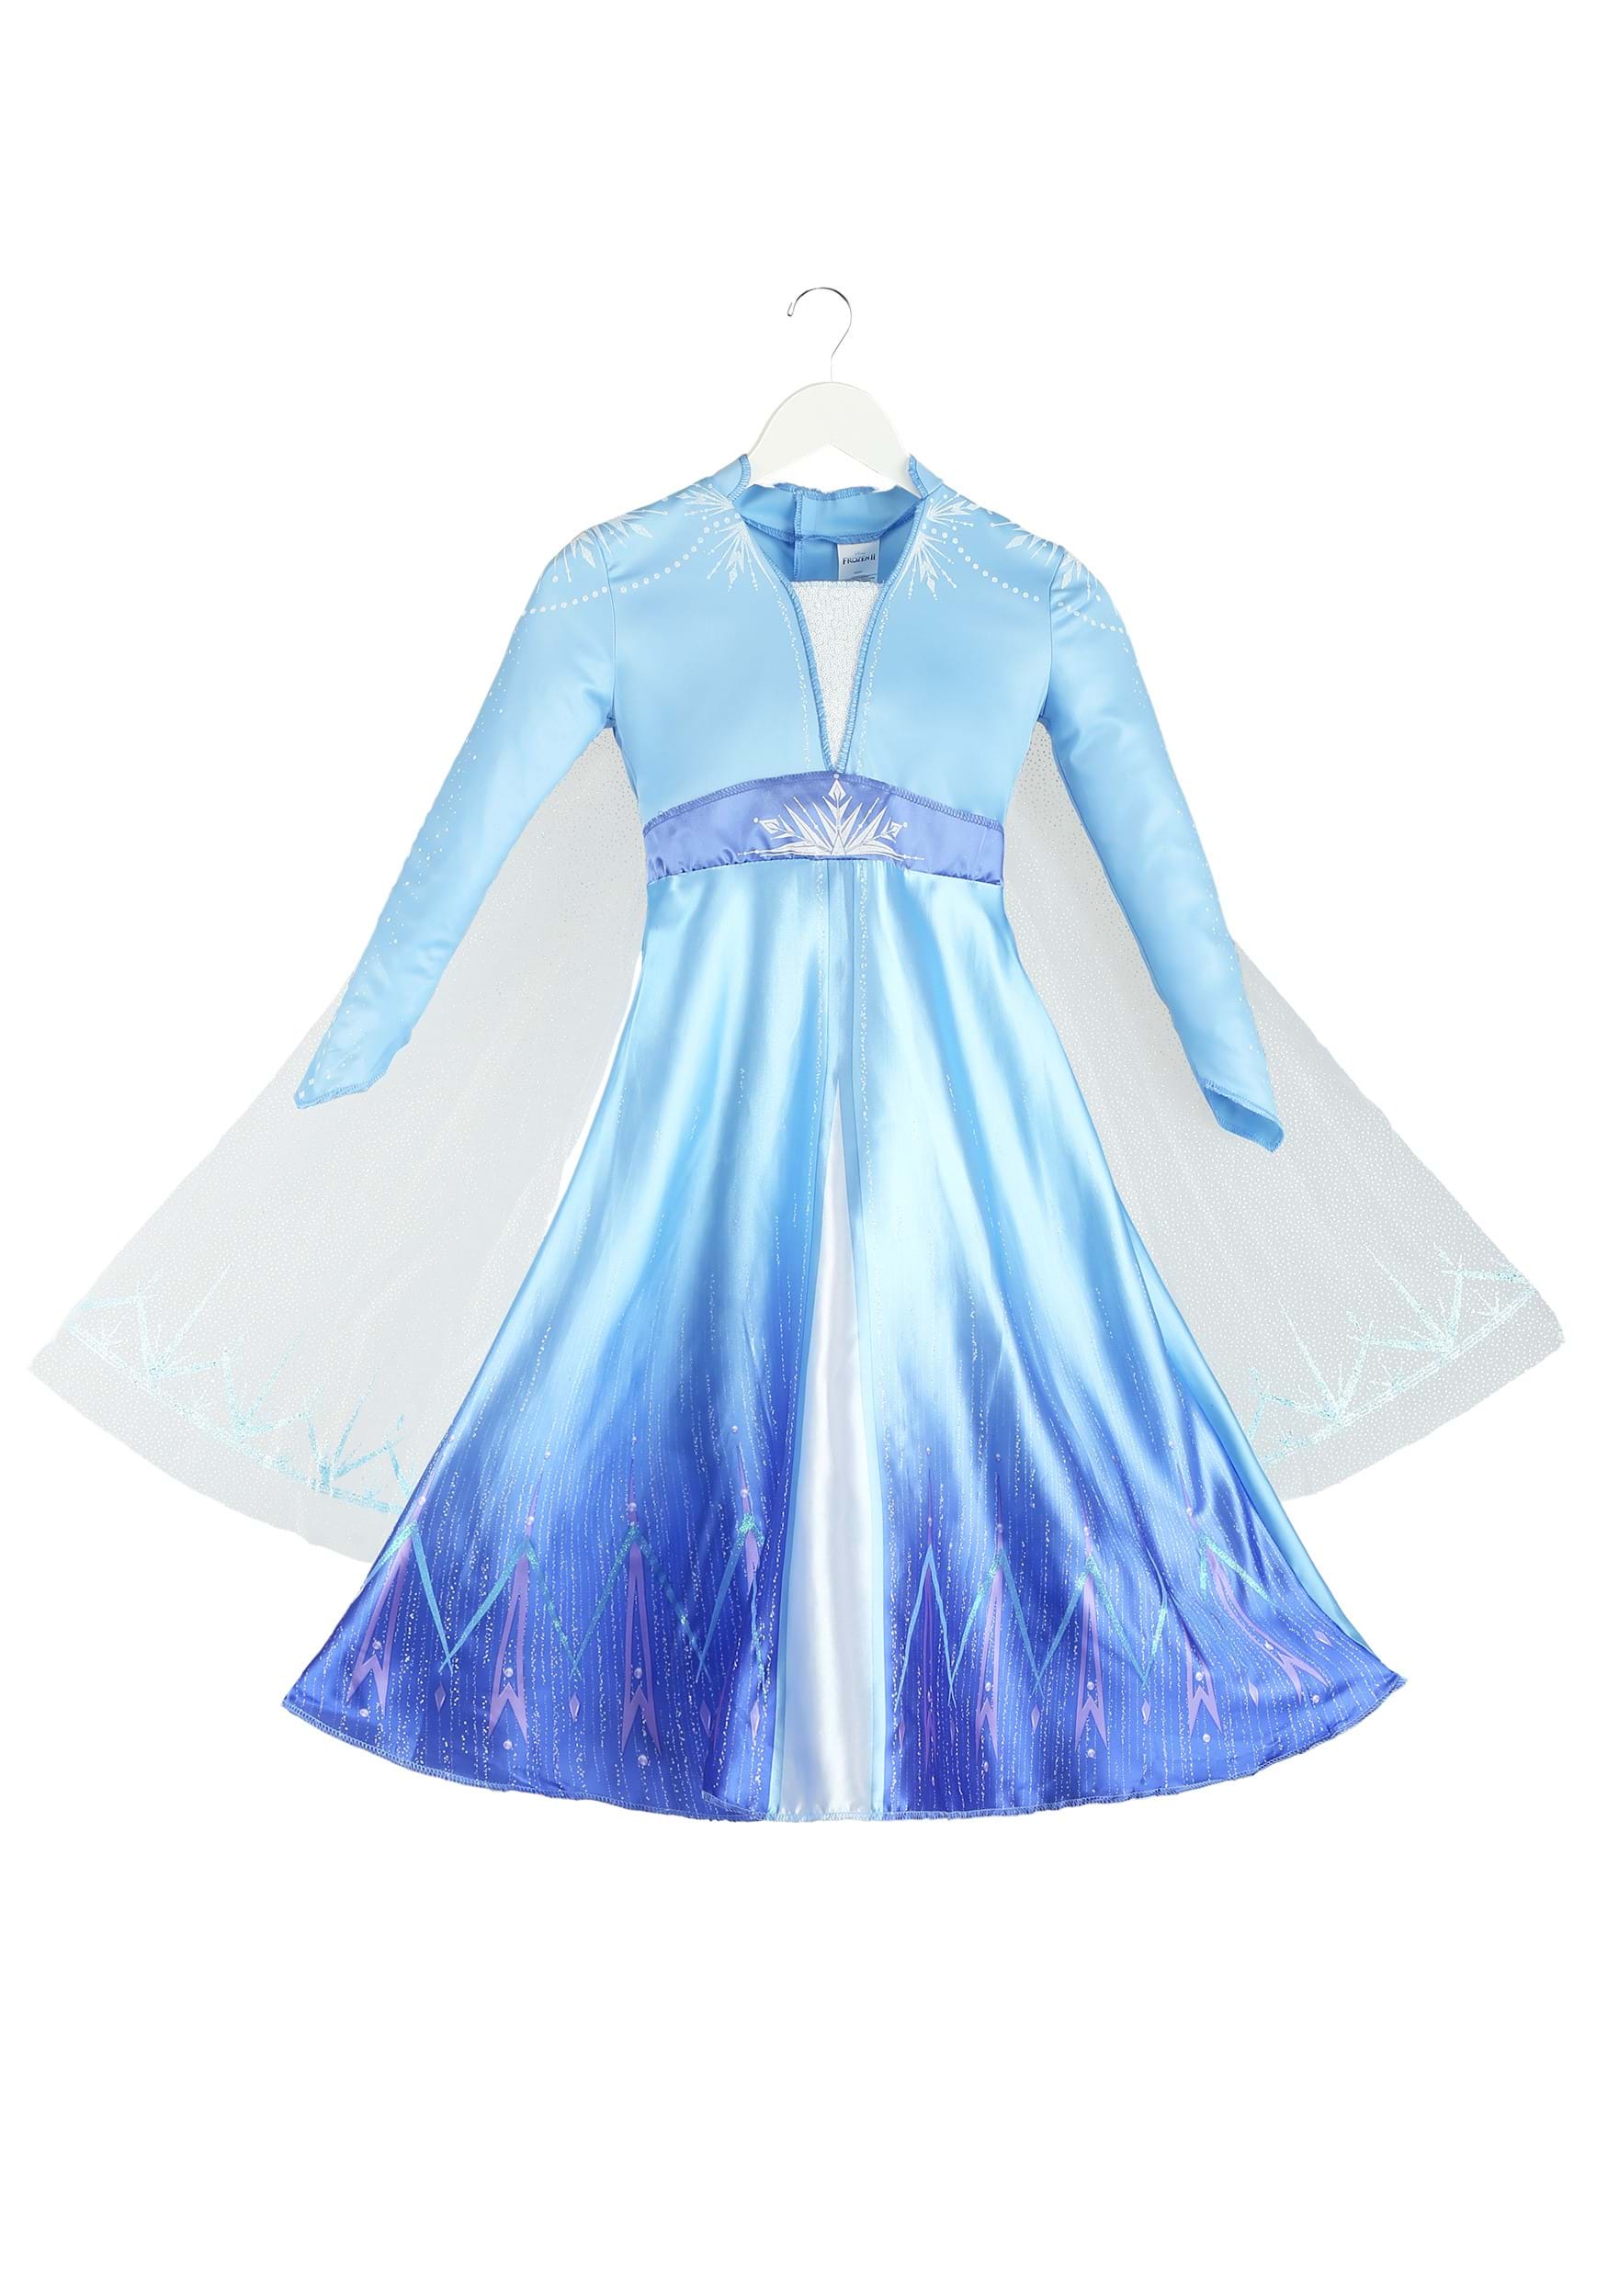 Elsa WHITE DRESS Frozen 2 becomes GIANT ! Queen Elsa White dress Frozen 2  and Queen Elsa Blue dress - YouTube